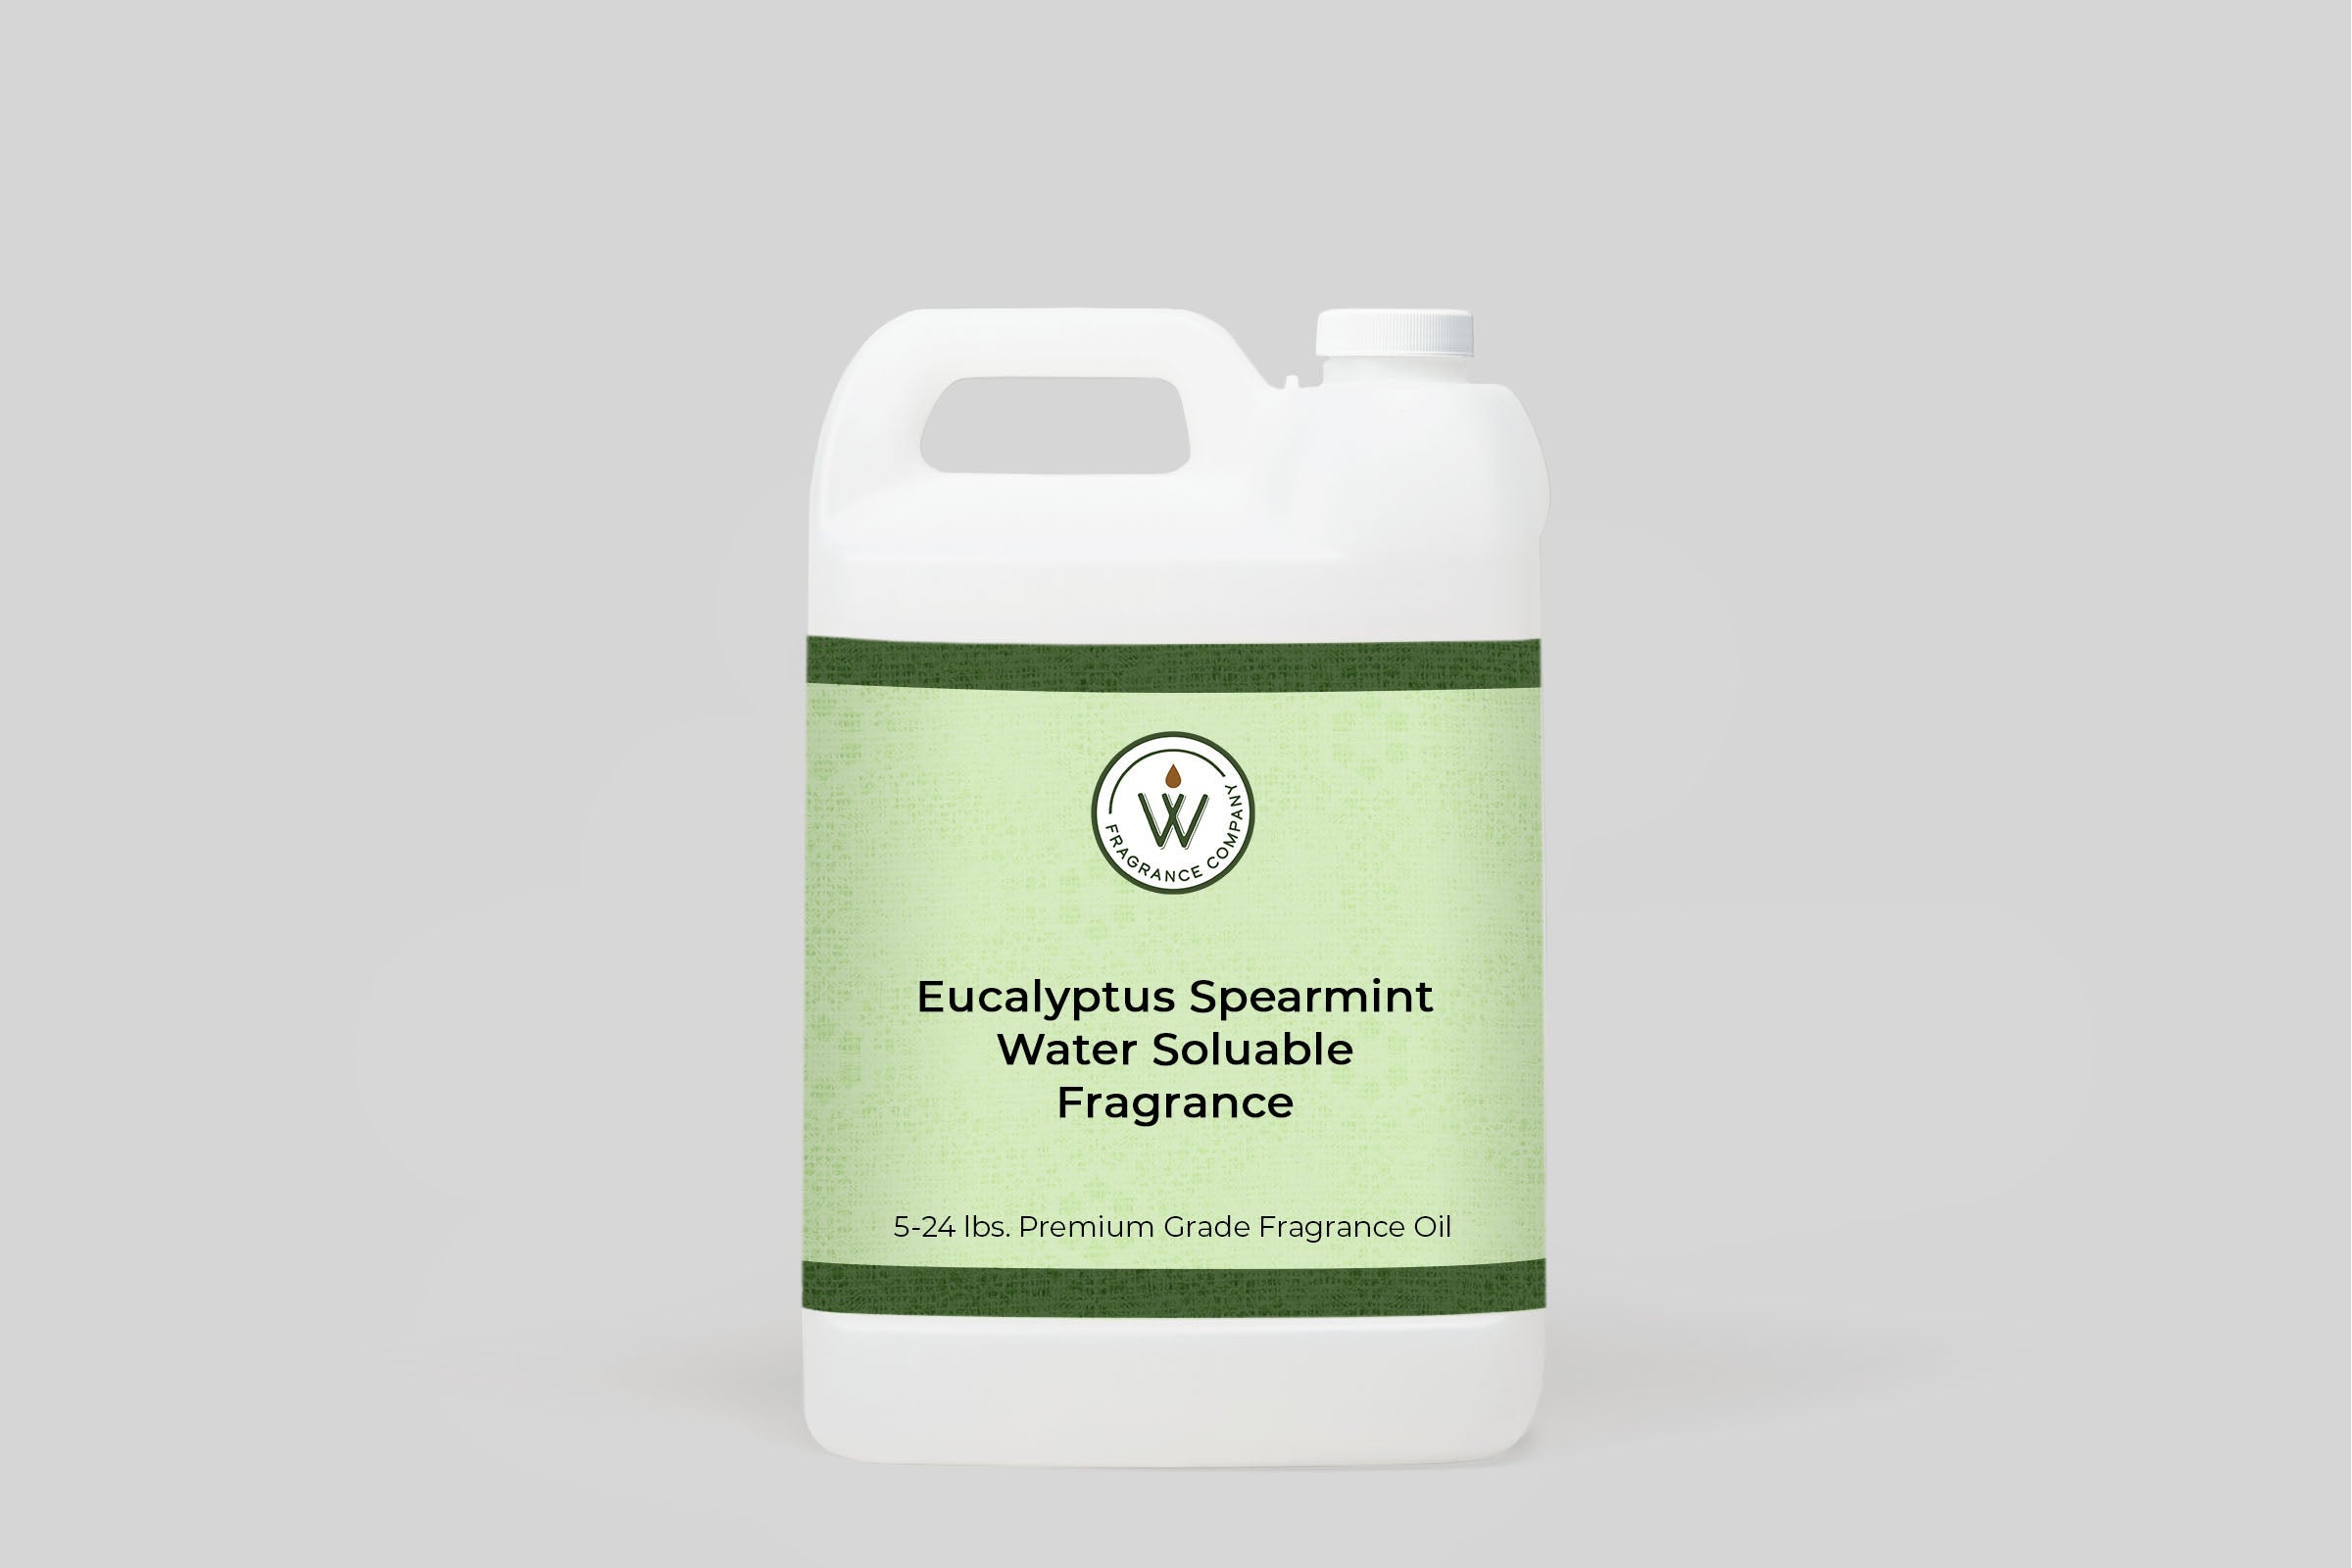 Eucalyptus Spearmint Water Soluble Fragrance